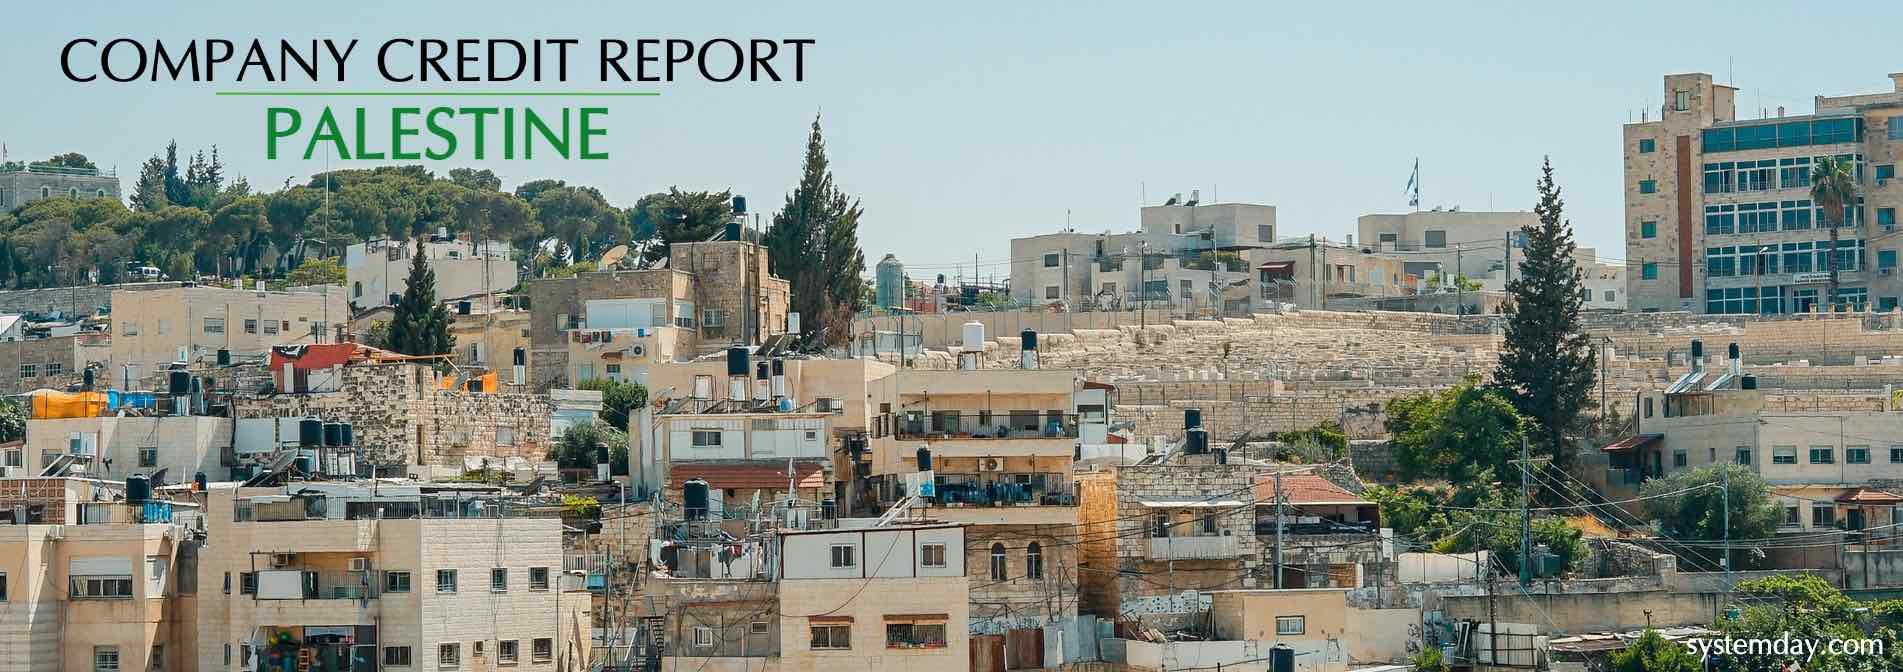 Palestine Company Credit Report